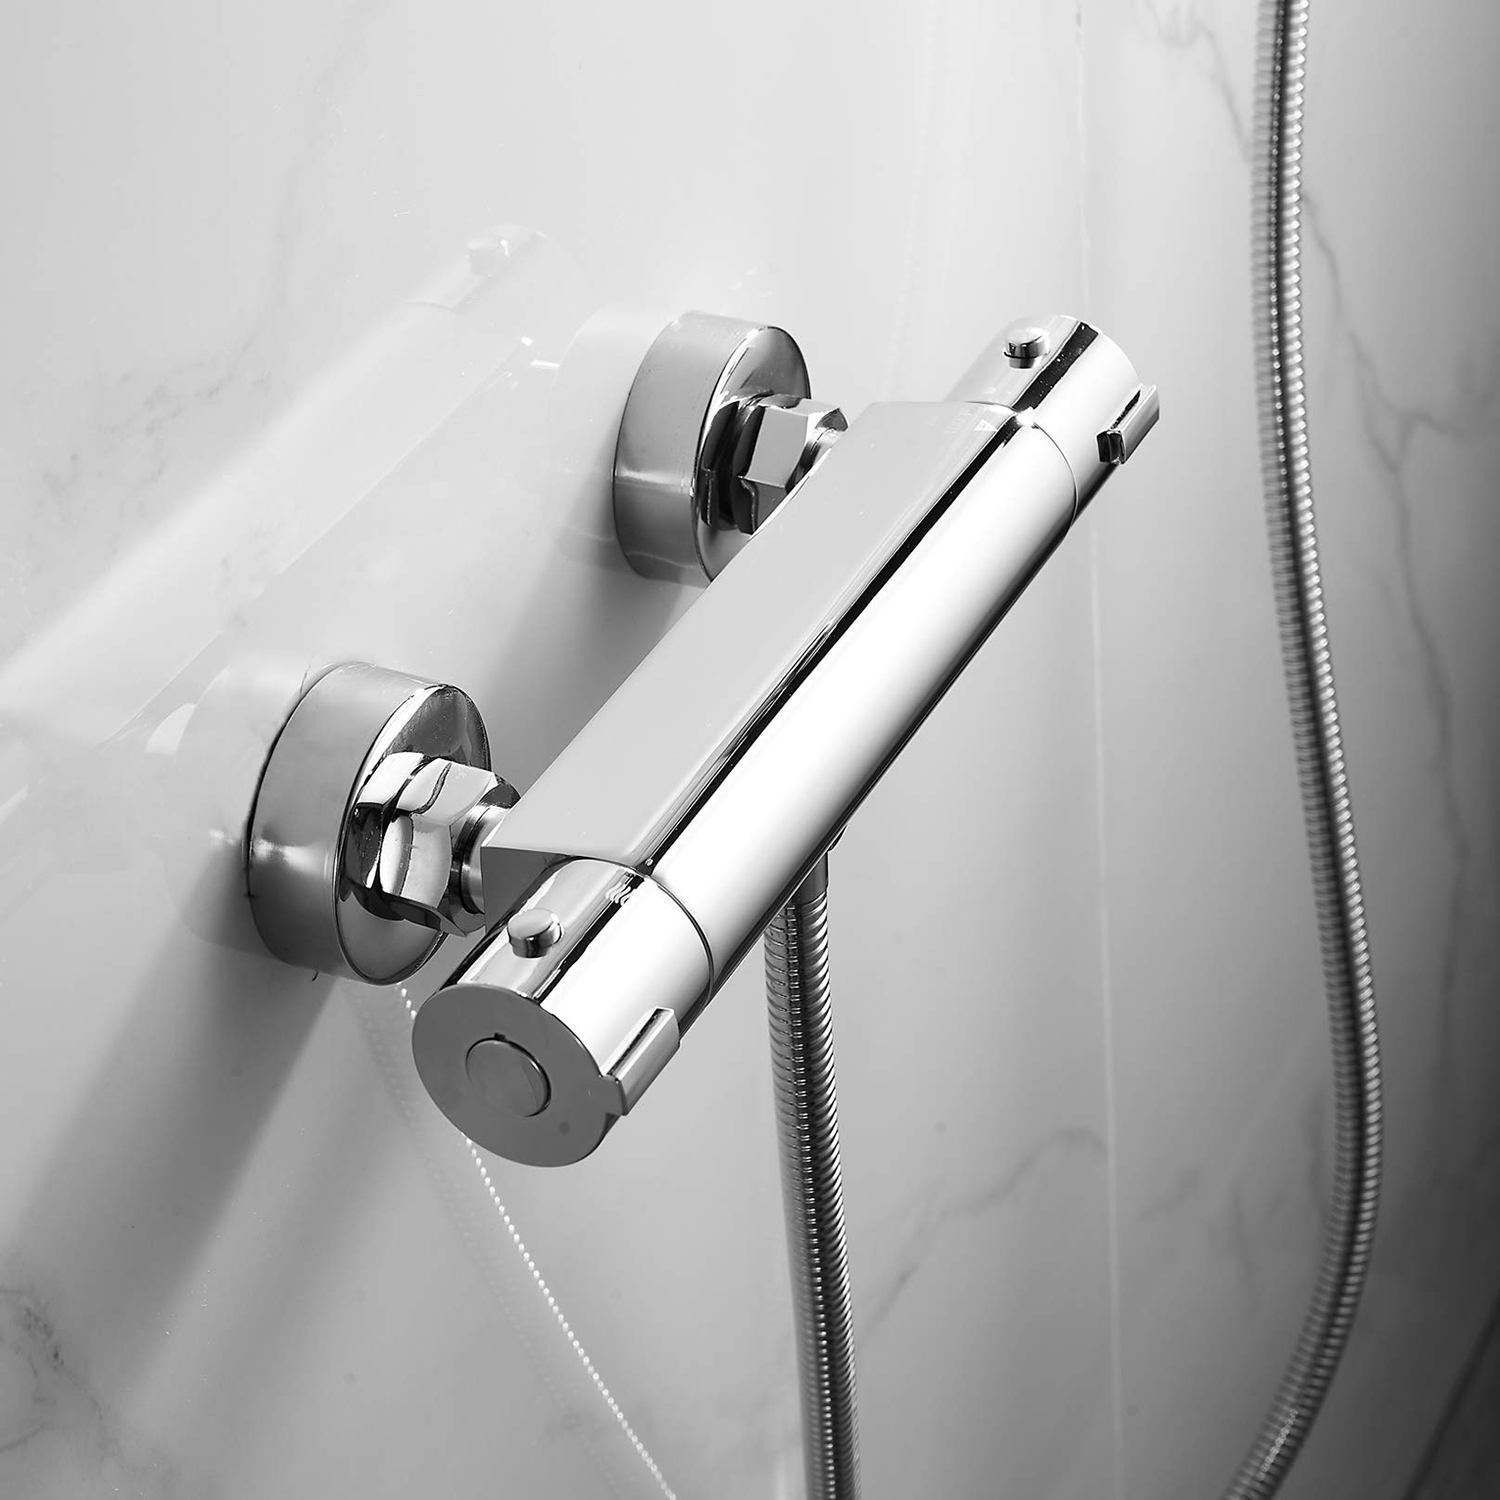 Grifos de válvula mezcladora para barra de ducha termostática para el hogar moderno, salida doble para baño cromado